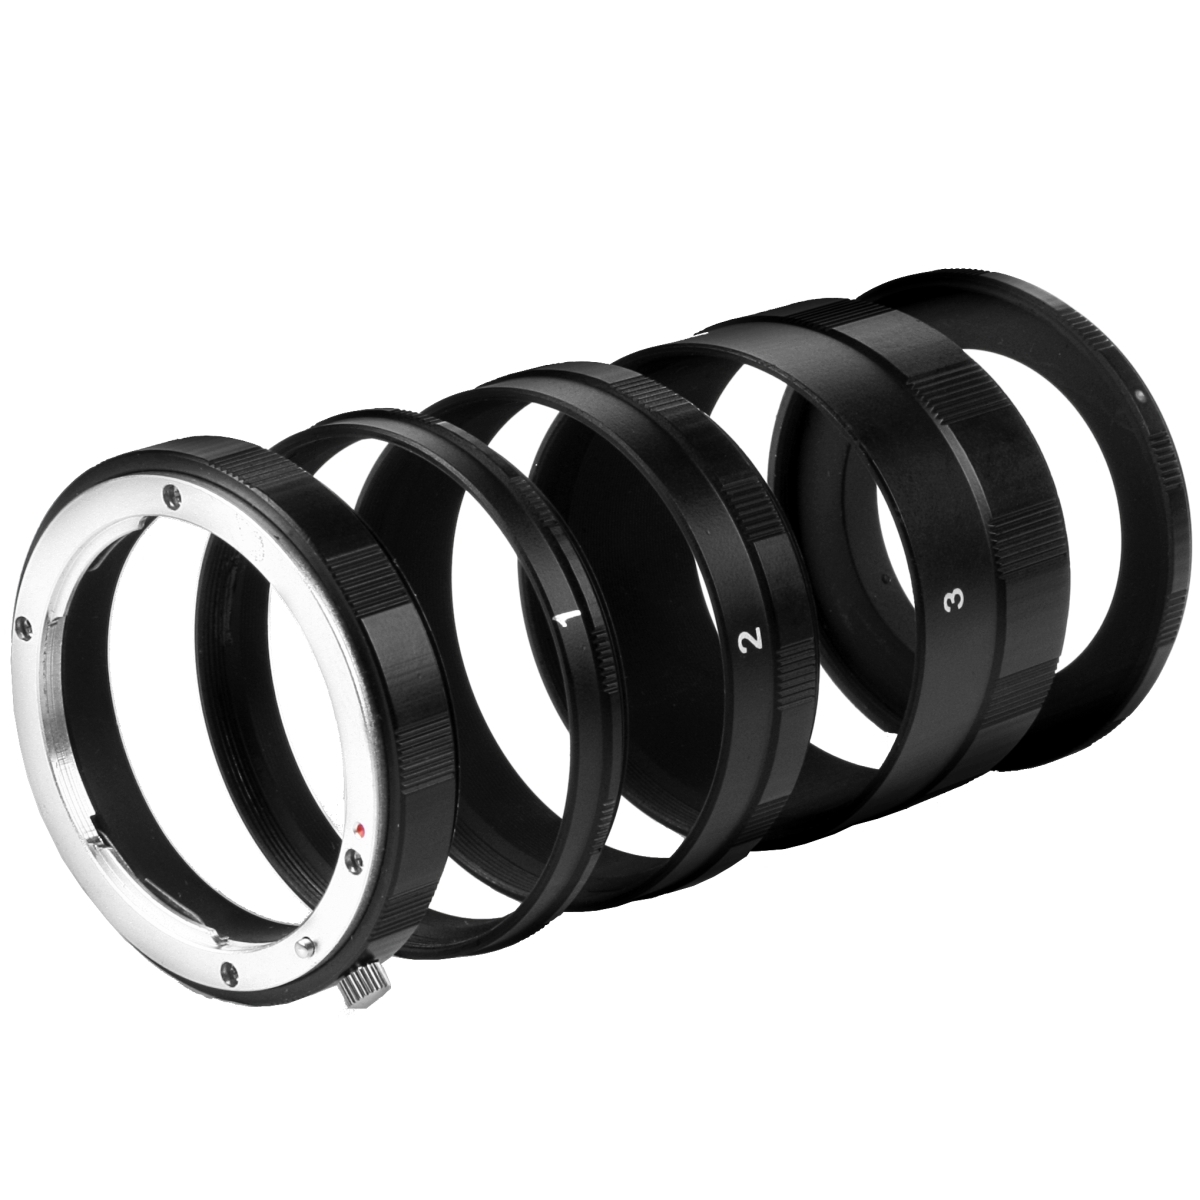 Walimex pro Macro Intermediate Ring Set for Canon